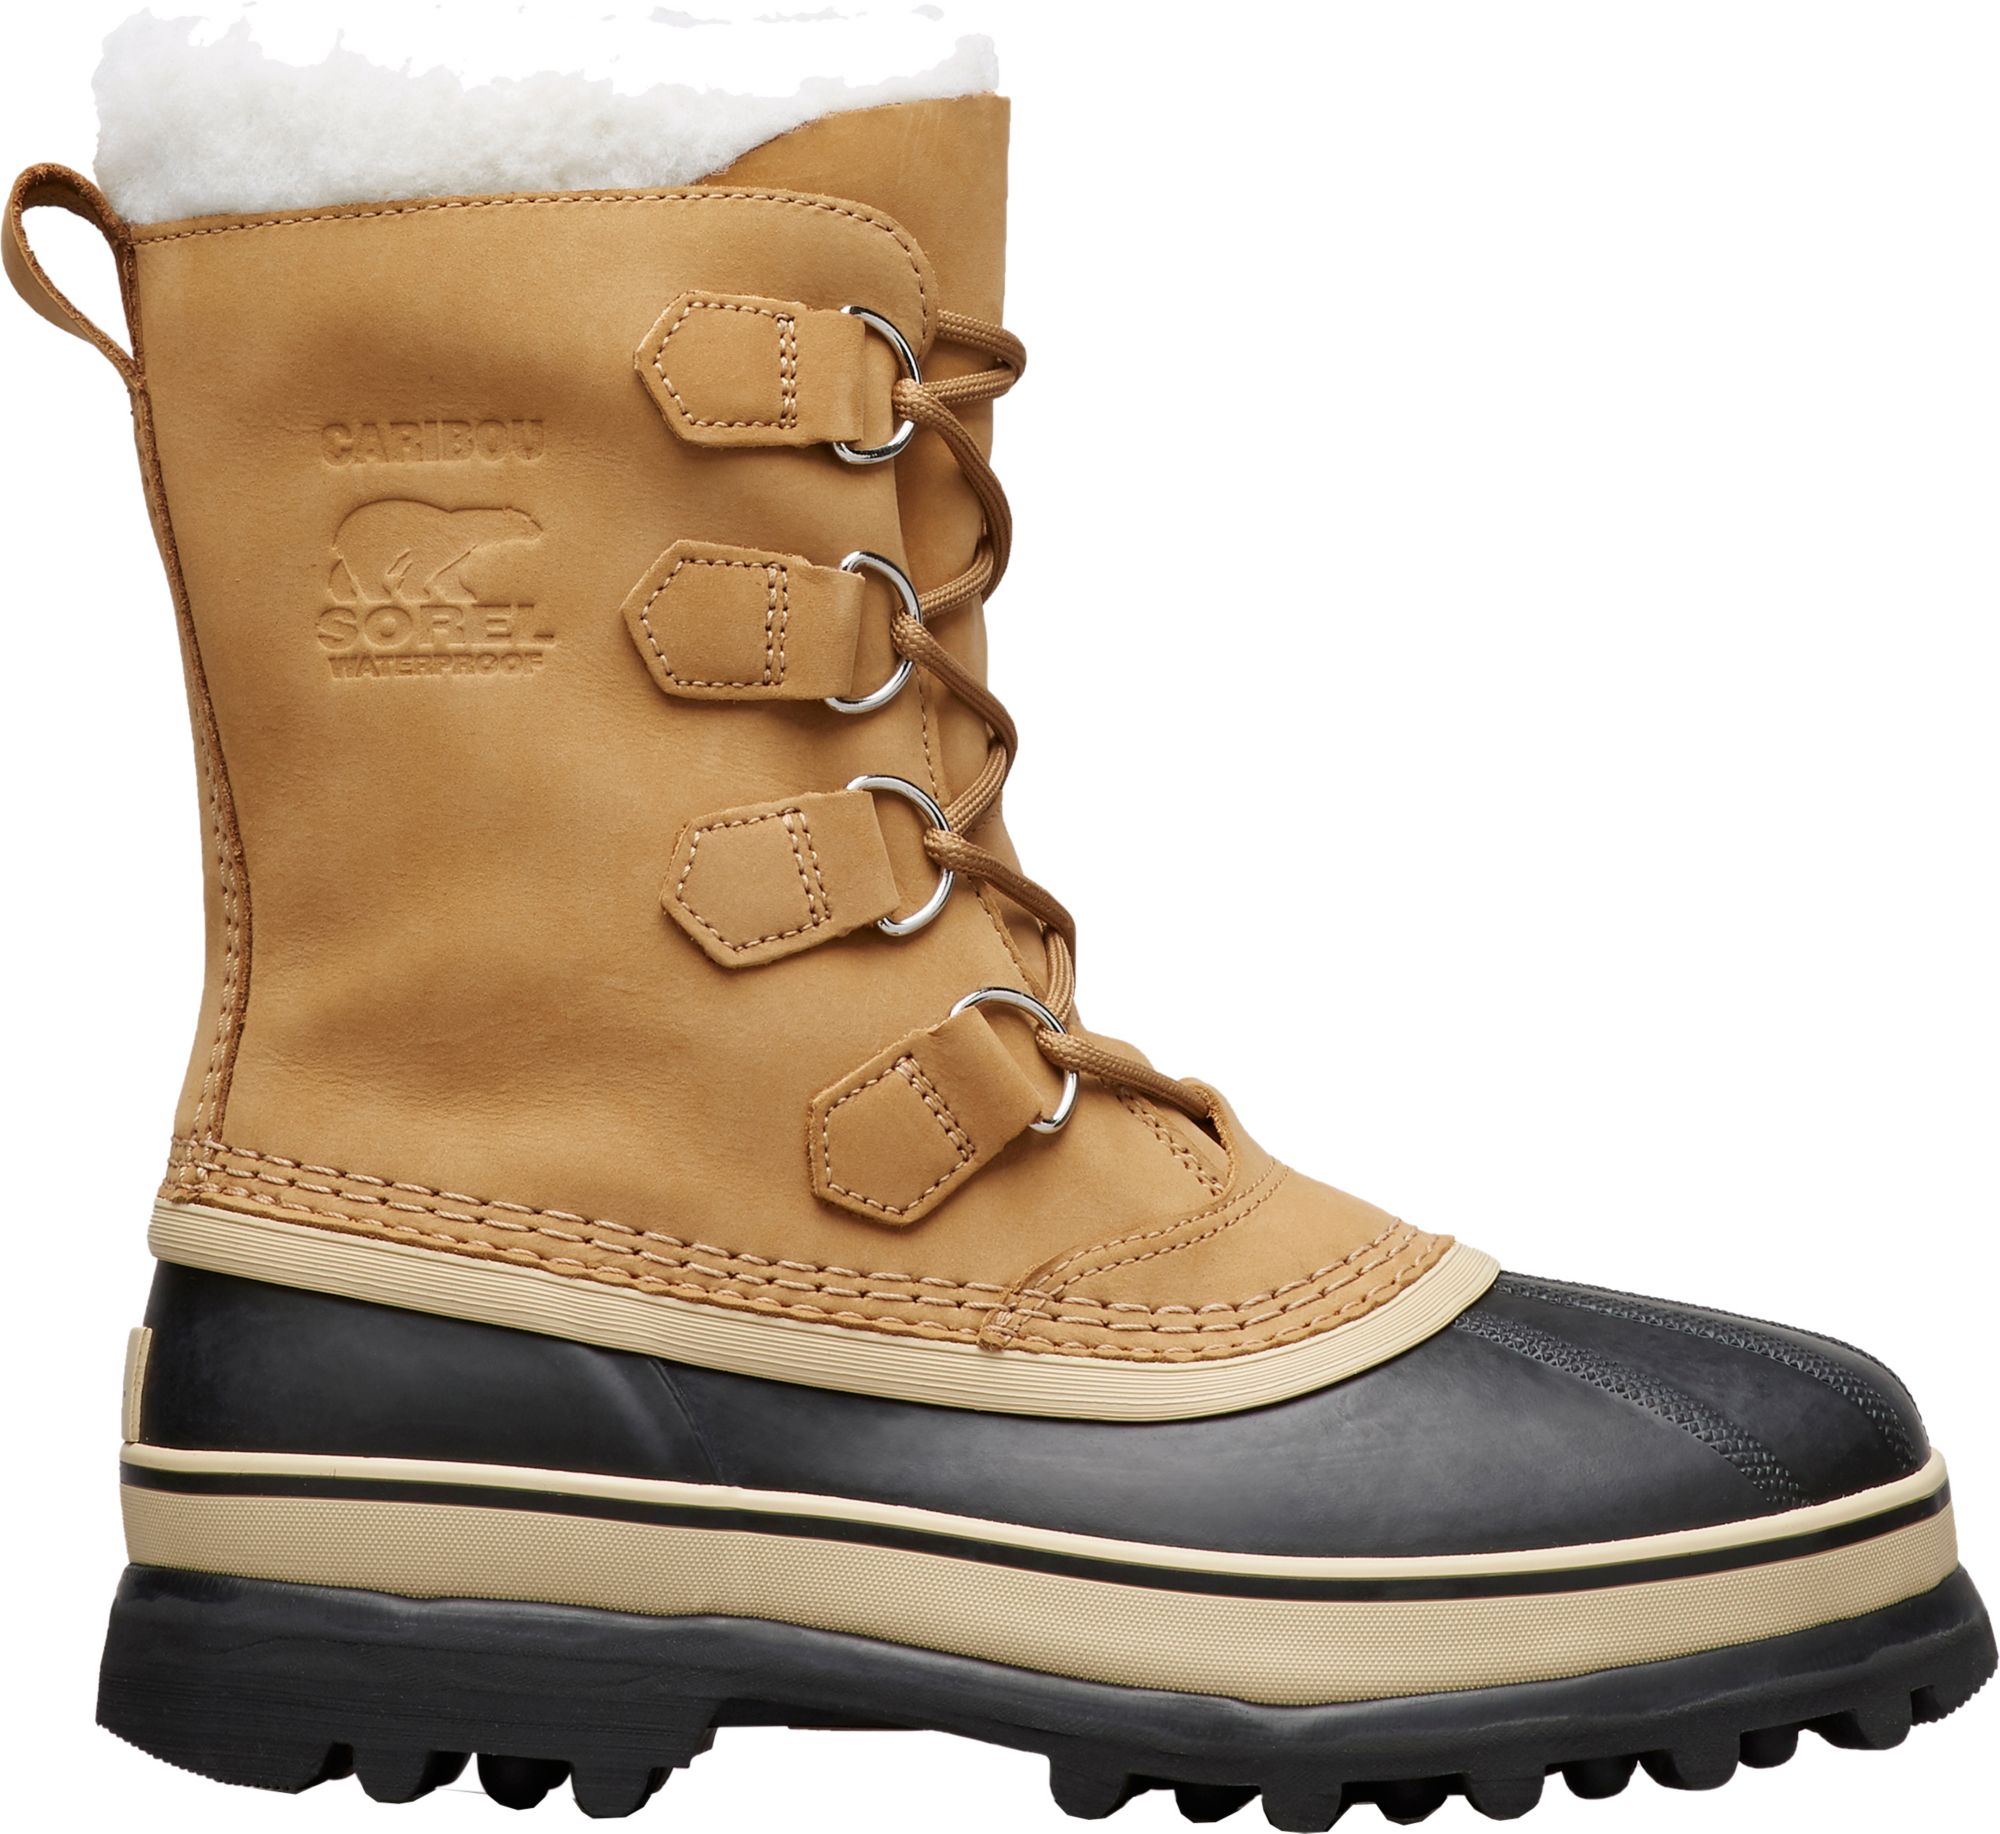 women's insulated winter work boots